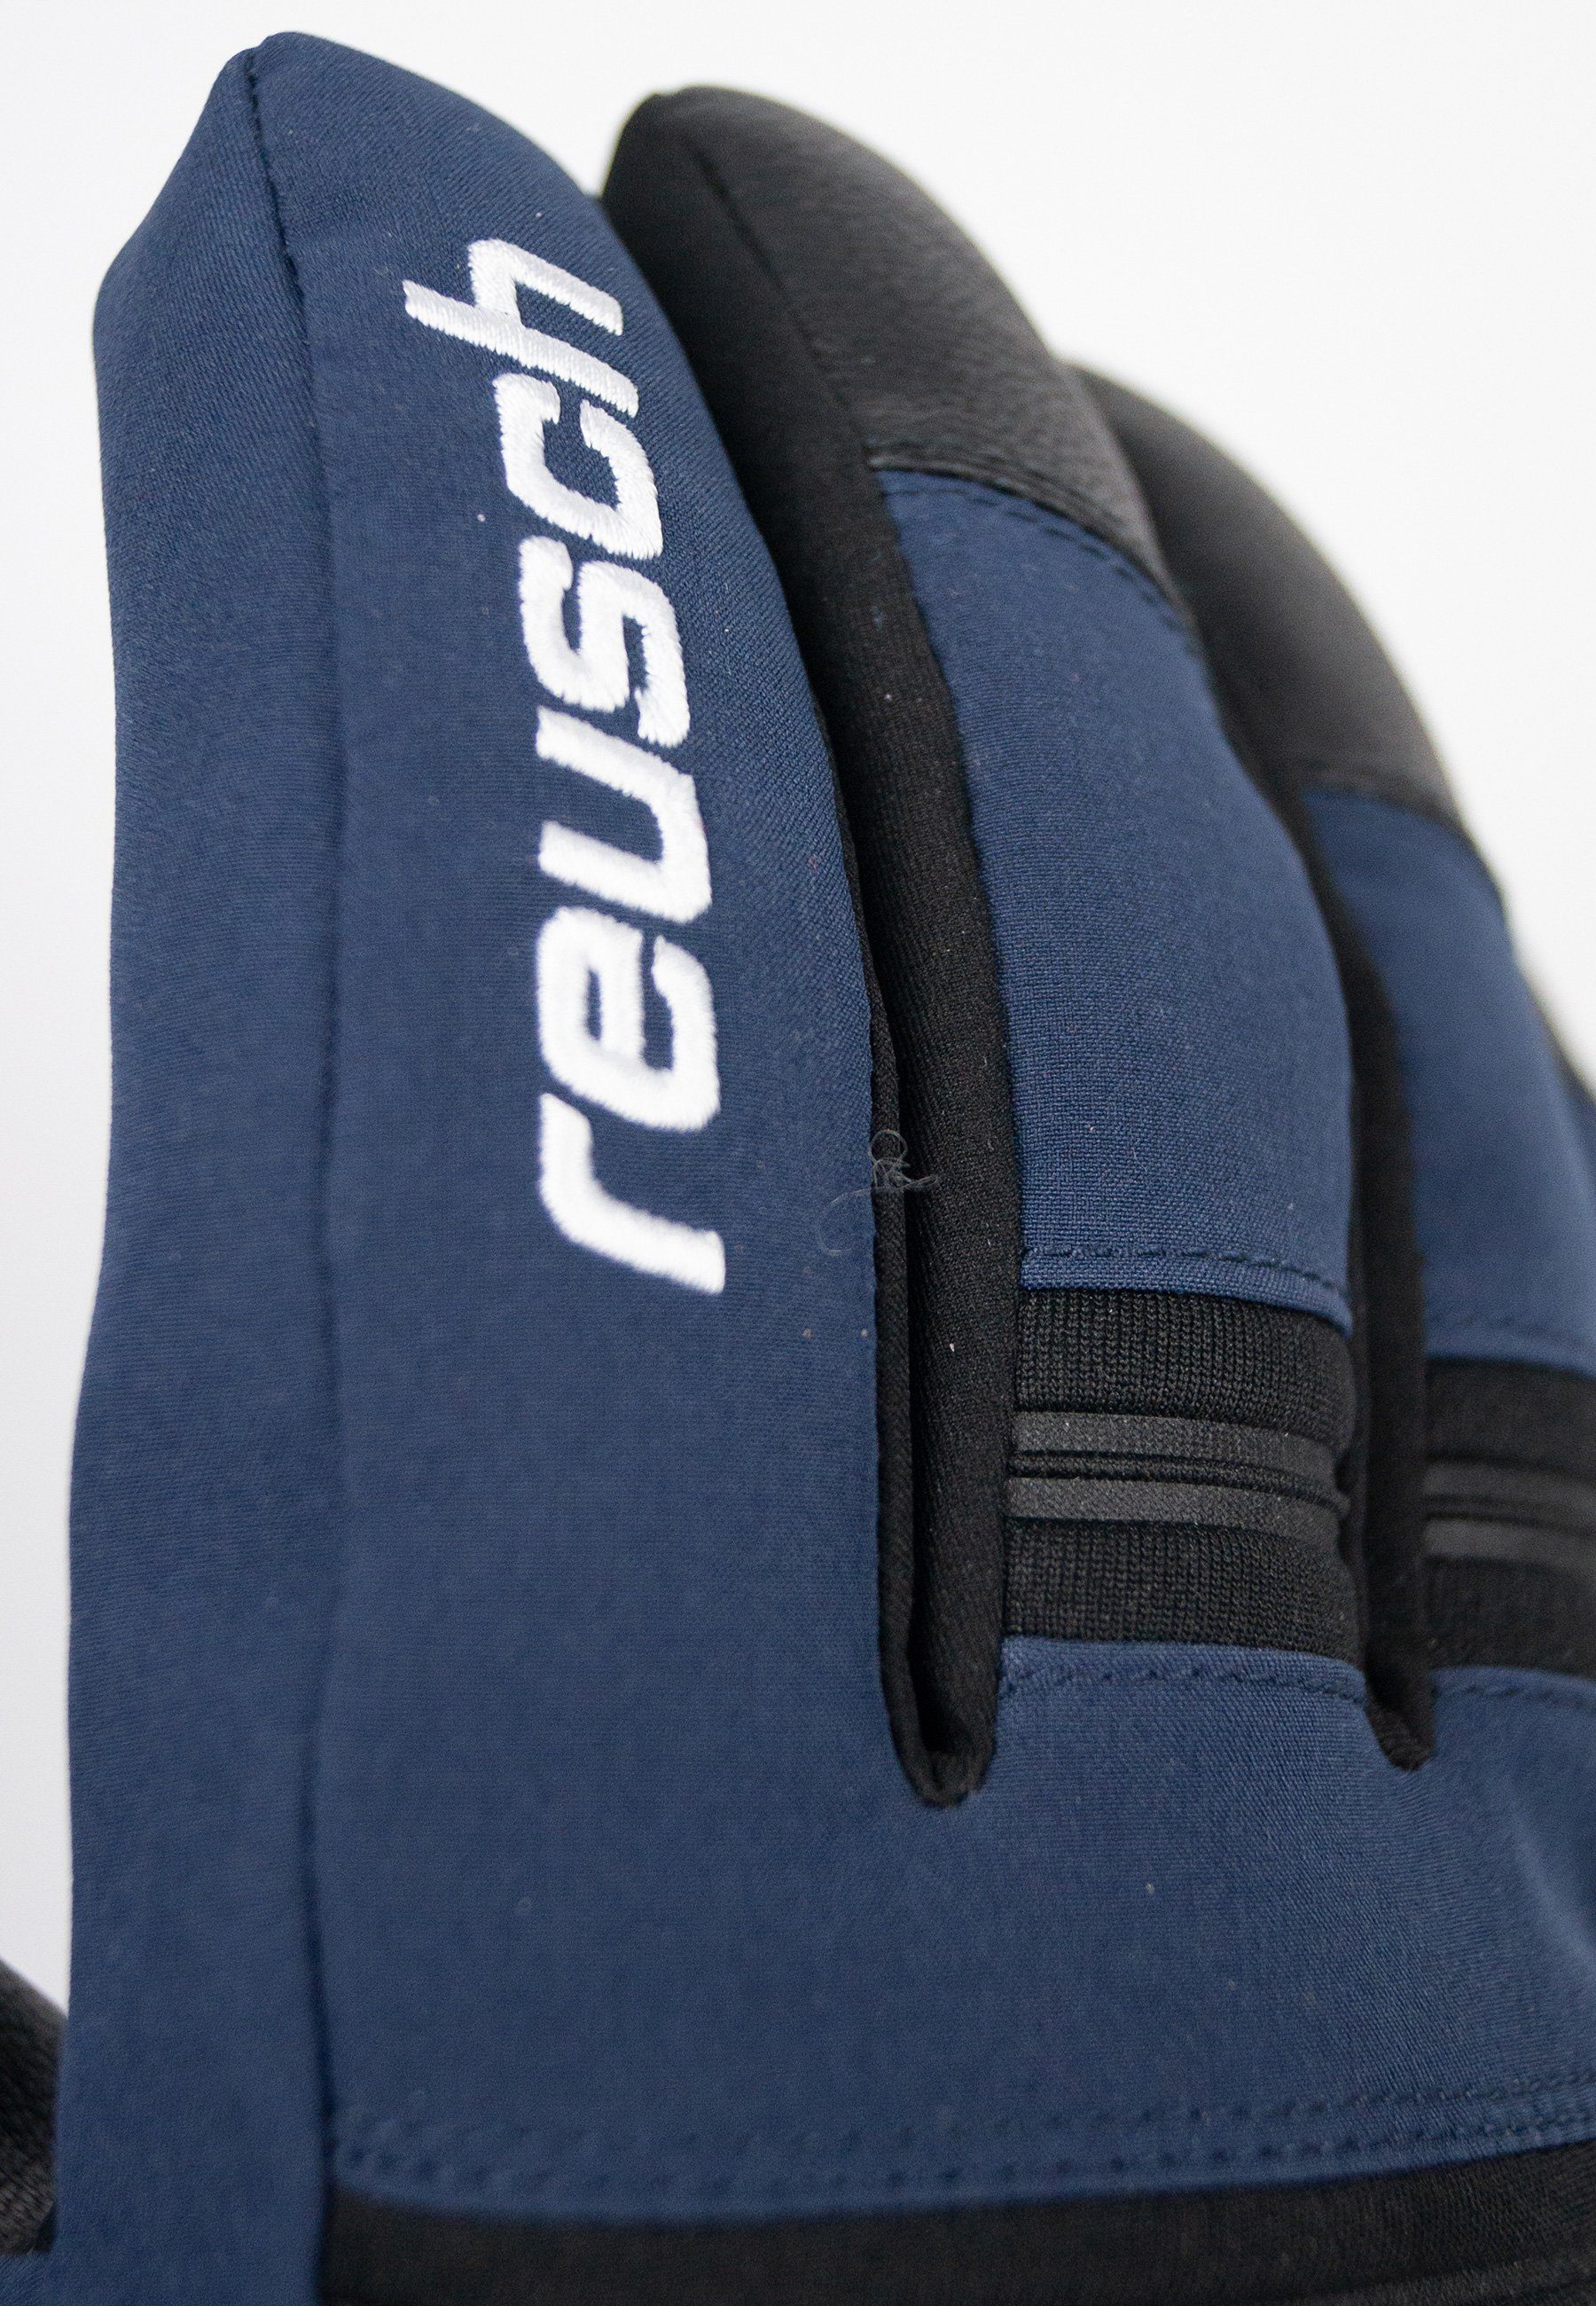 Reusch Skihandschuhe Kondor R-TEX® wasserdichtem in Design atmungsaktivem und blau-schwarz XT